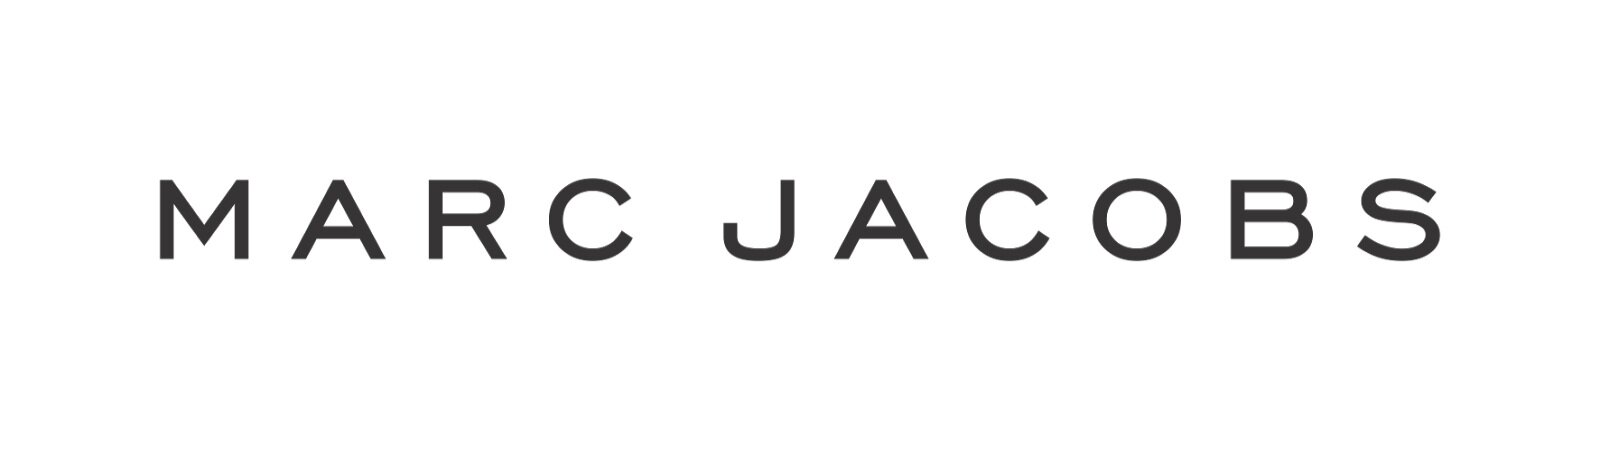 Marc+Jacobs.jpg